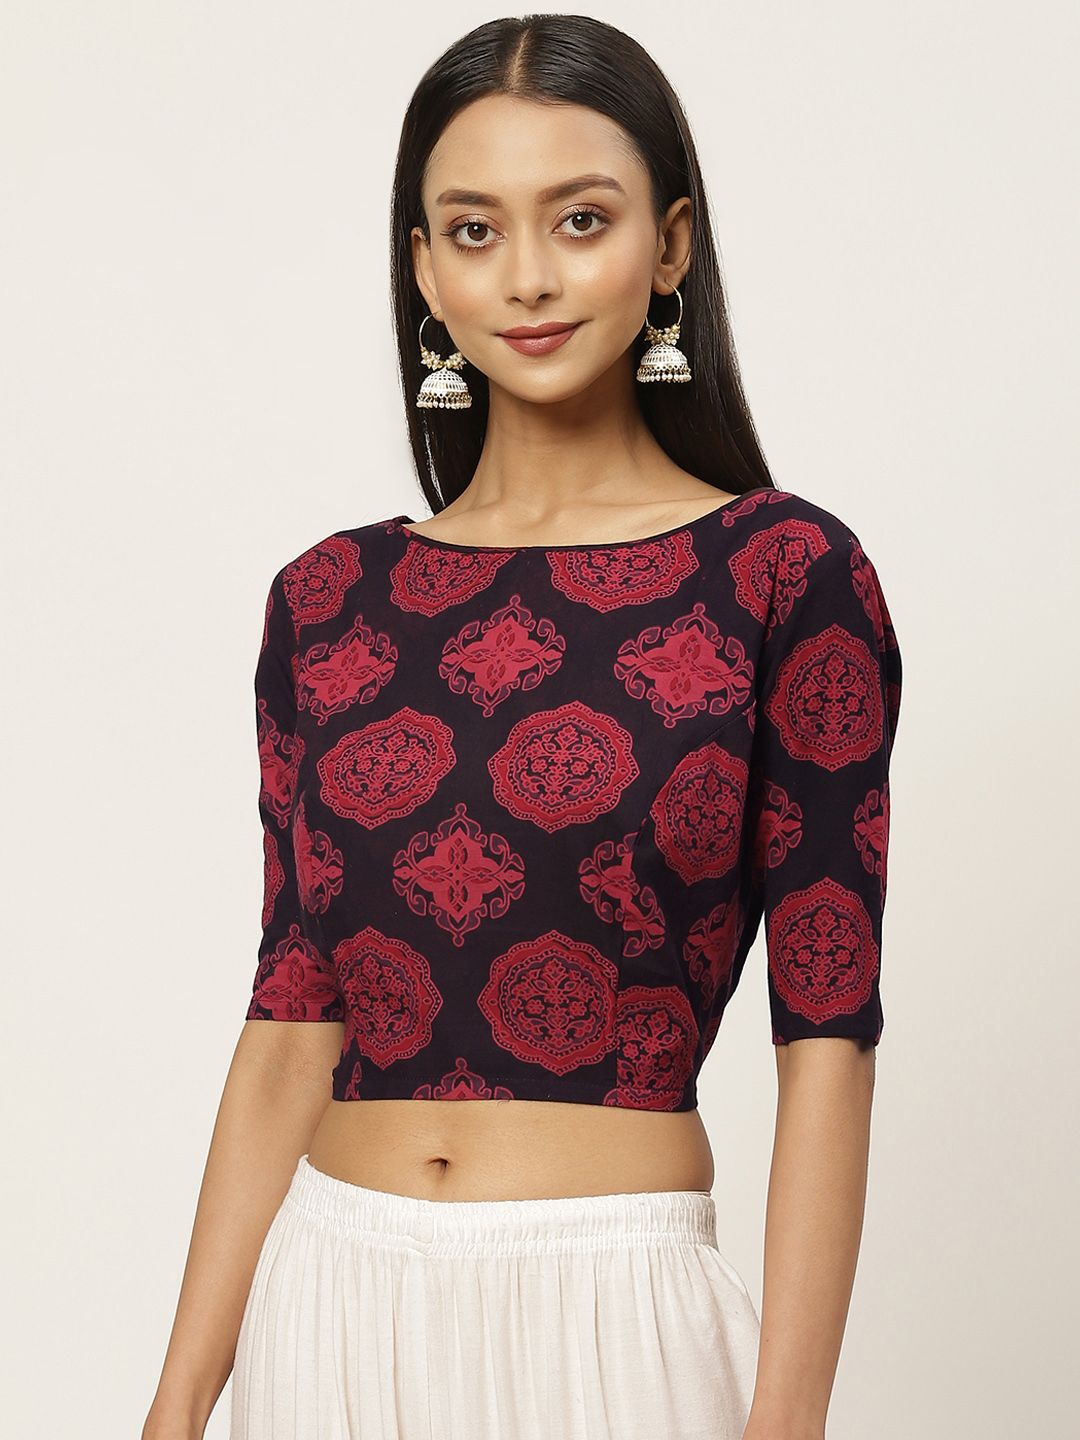 Studio Shringaar Women Red & Black Printed Pure Cotton Saree Blouse Price in India